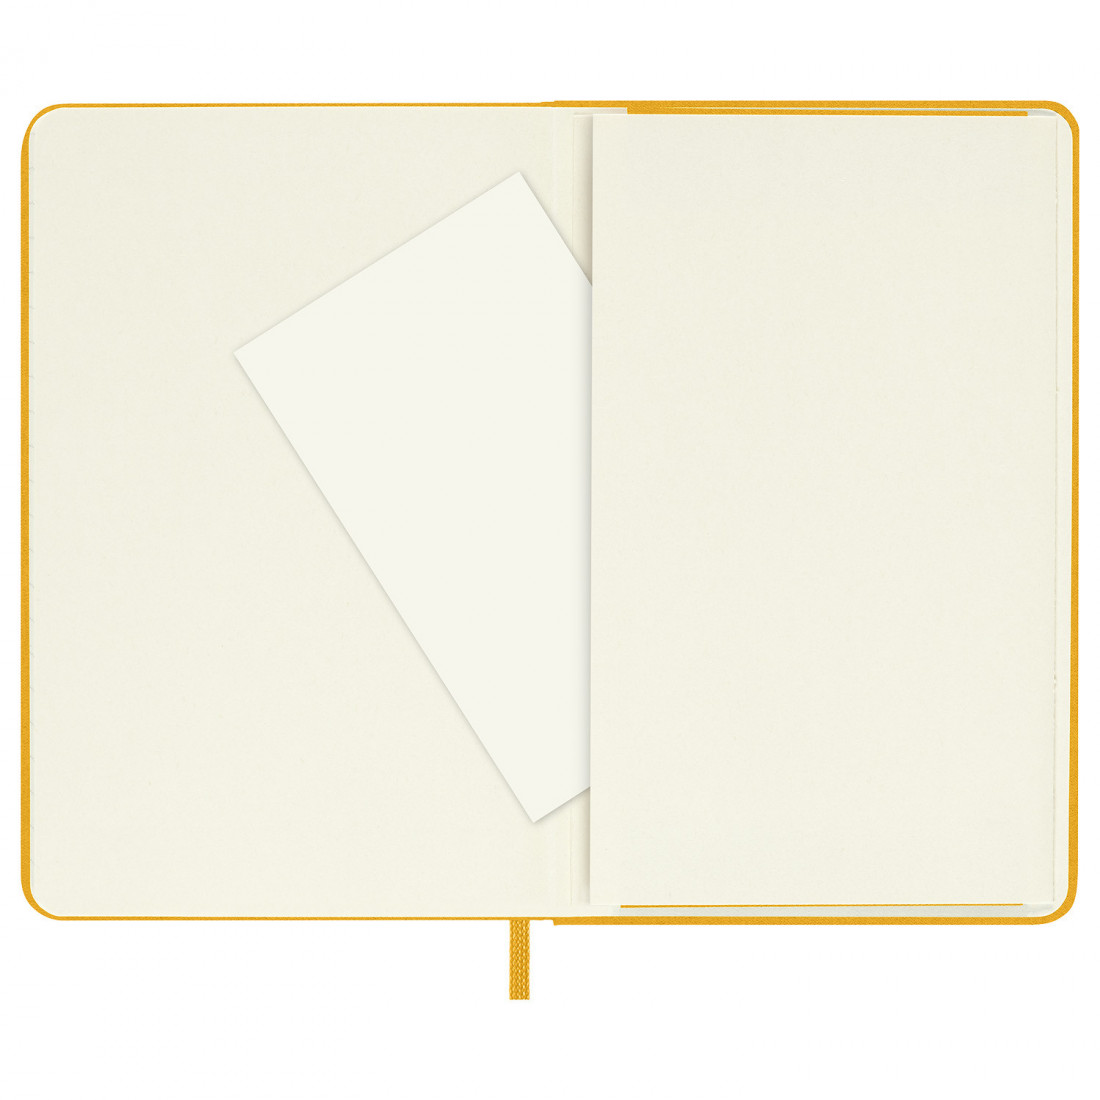 Notebook Large 13x21 Silk Orange Yellow Ruled Hard Cover Moleskine